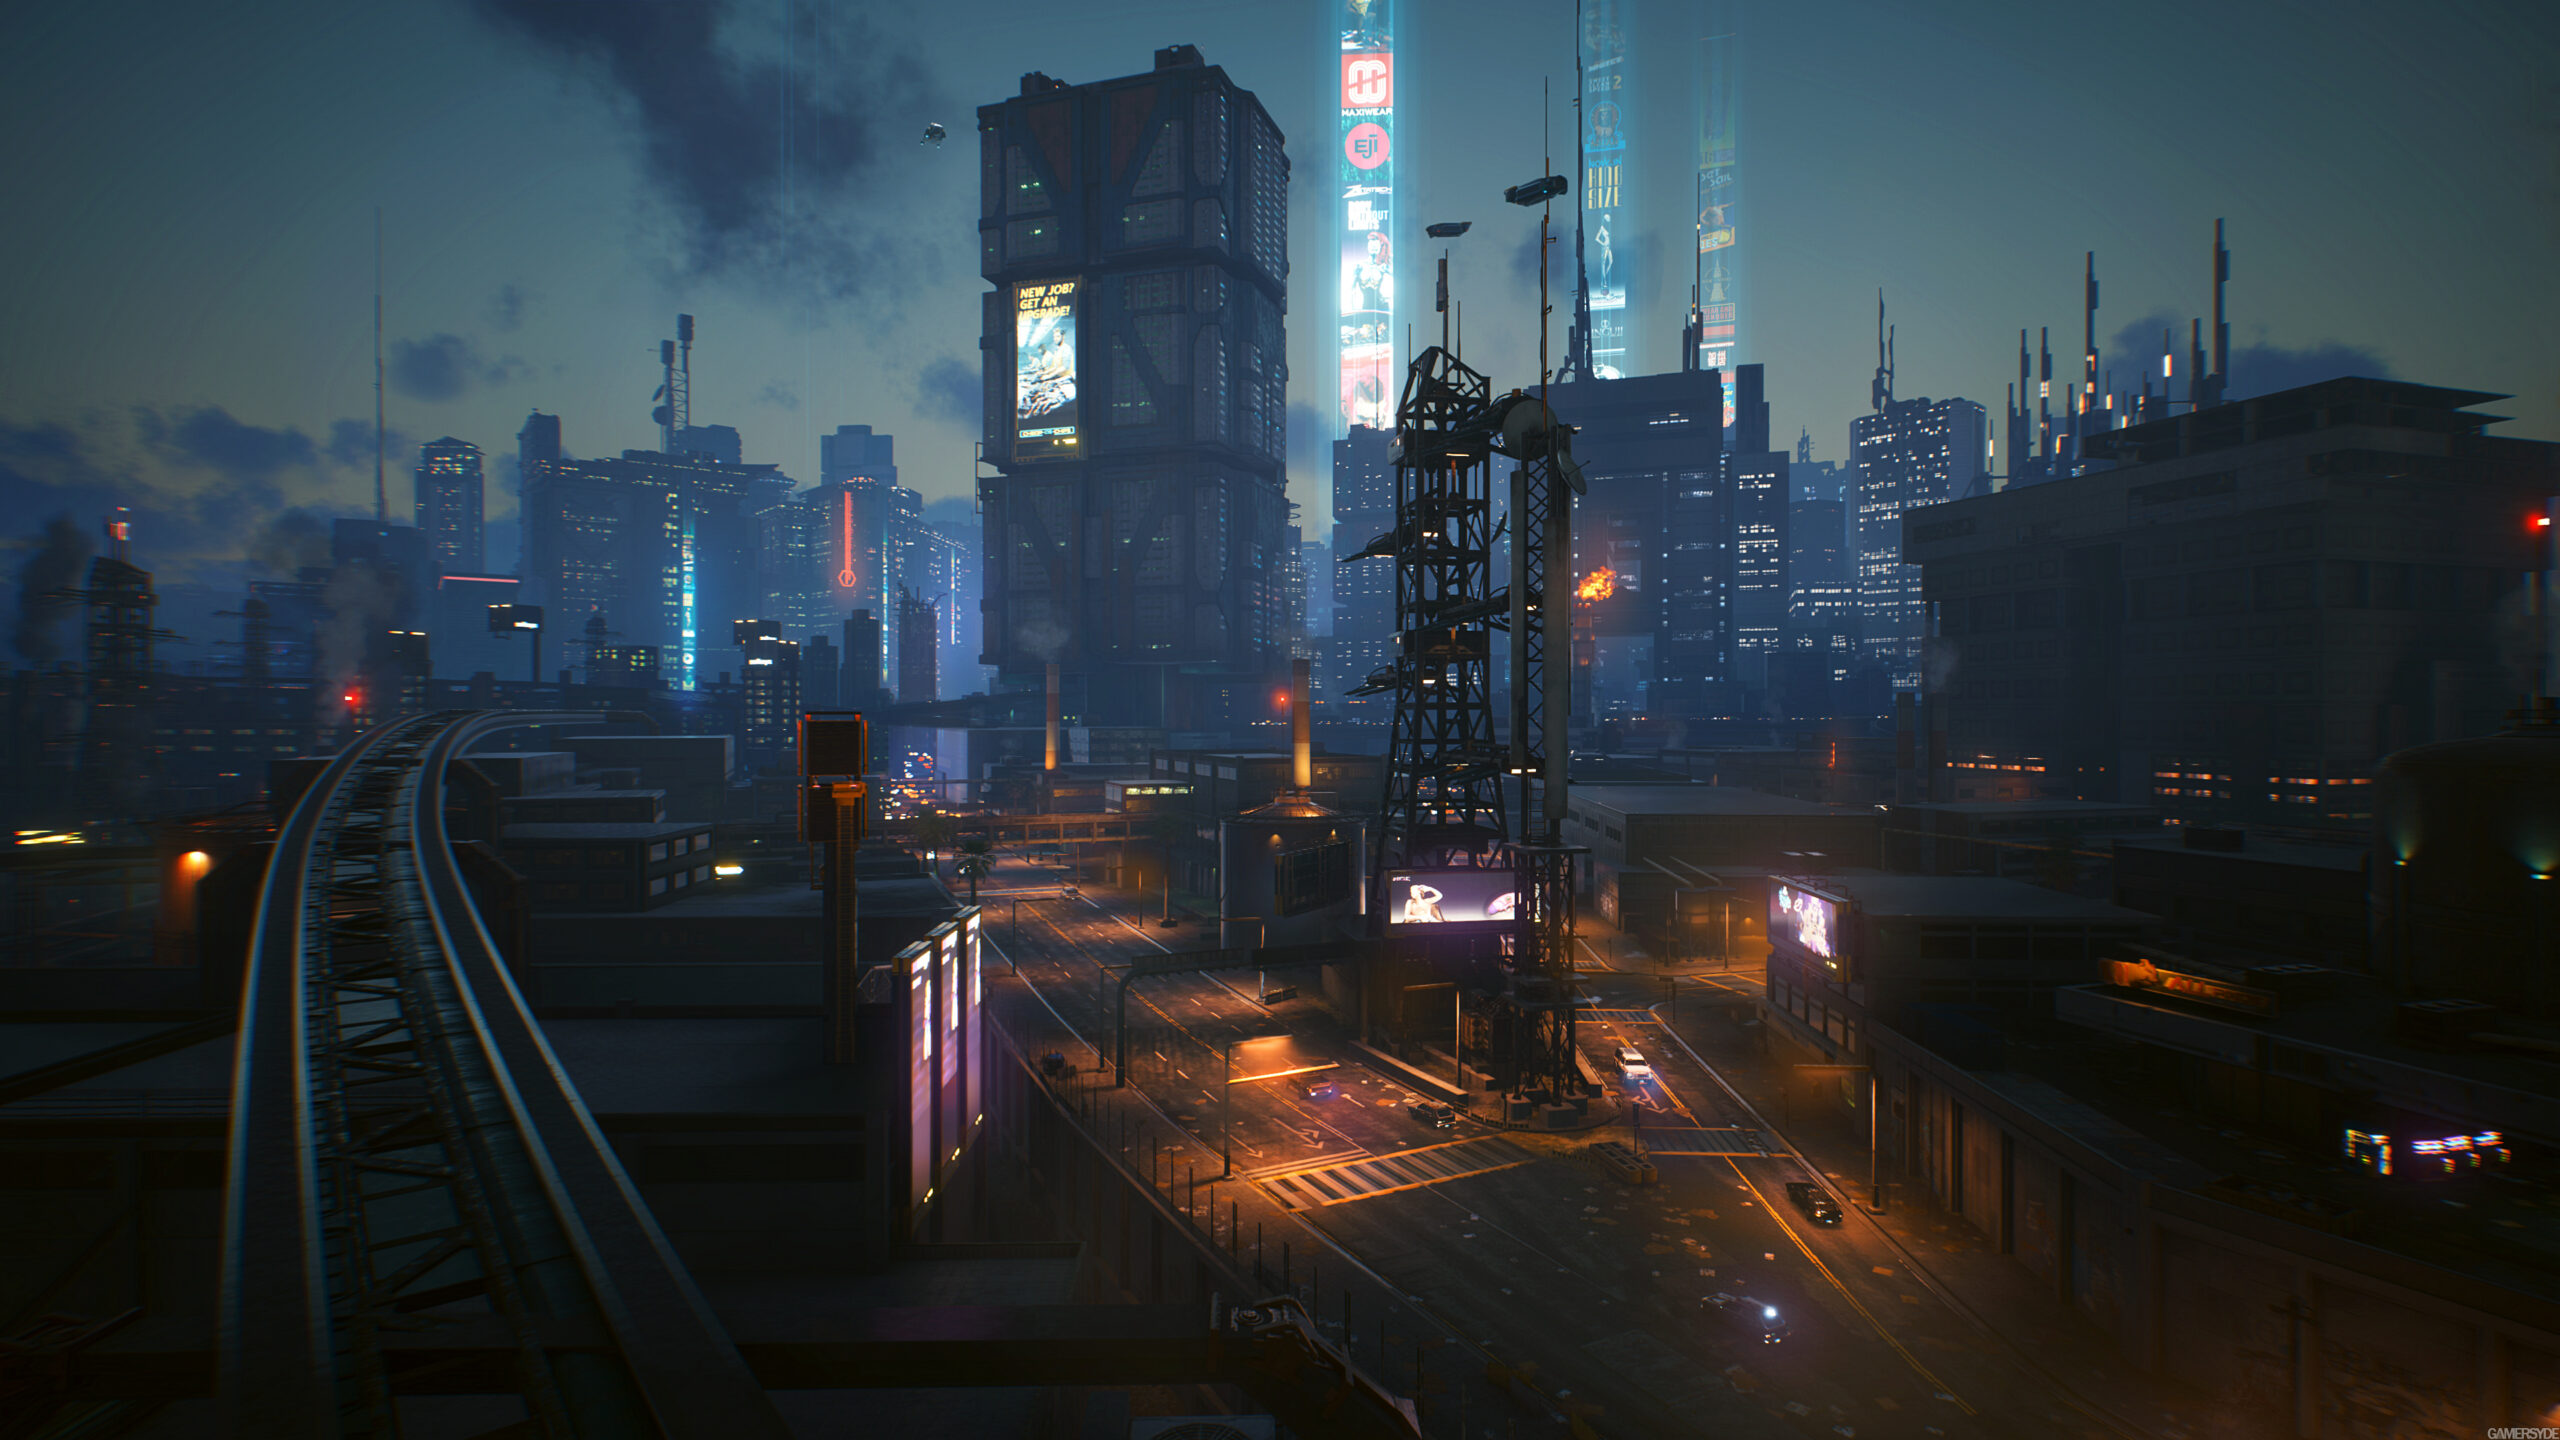 Cyberpunk 2077 4k Screenshots Show A Night City Full Of Life 1487